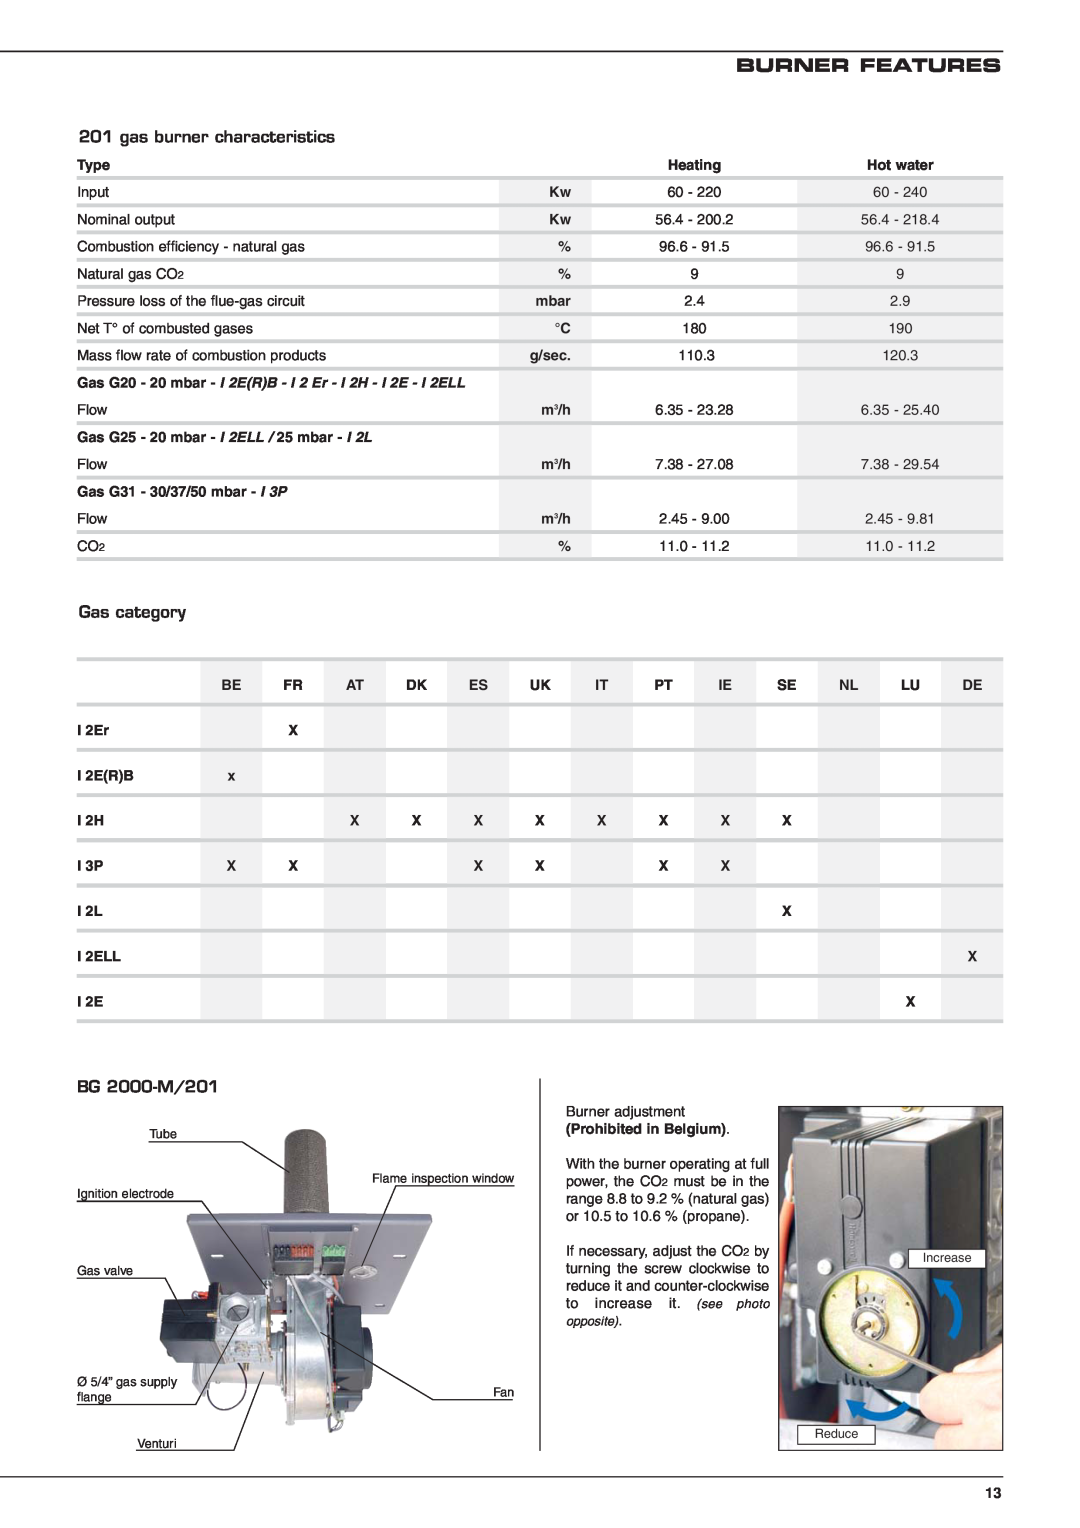 Heatmaster manual Burner Features, gas burner characteristics, Gas category, BG 2000-M/201 